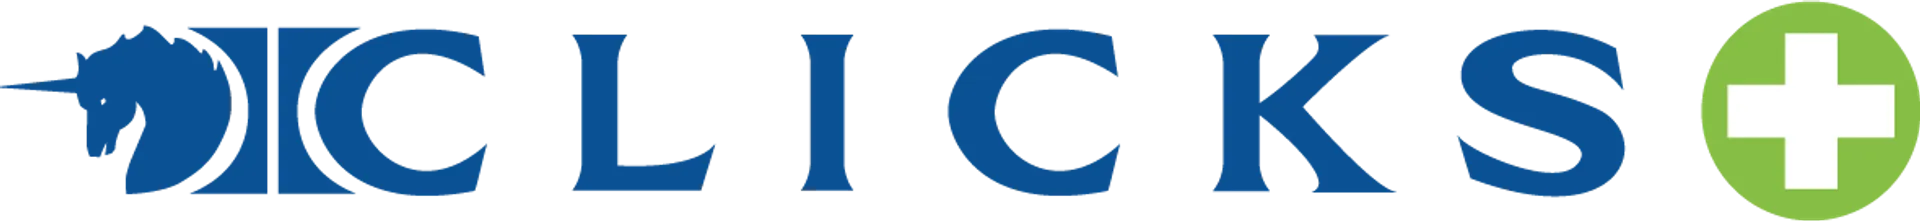 CLICKS logo